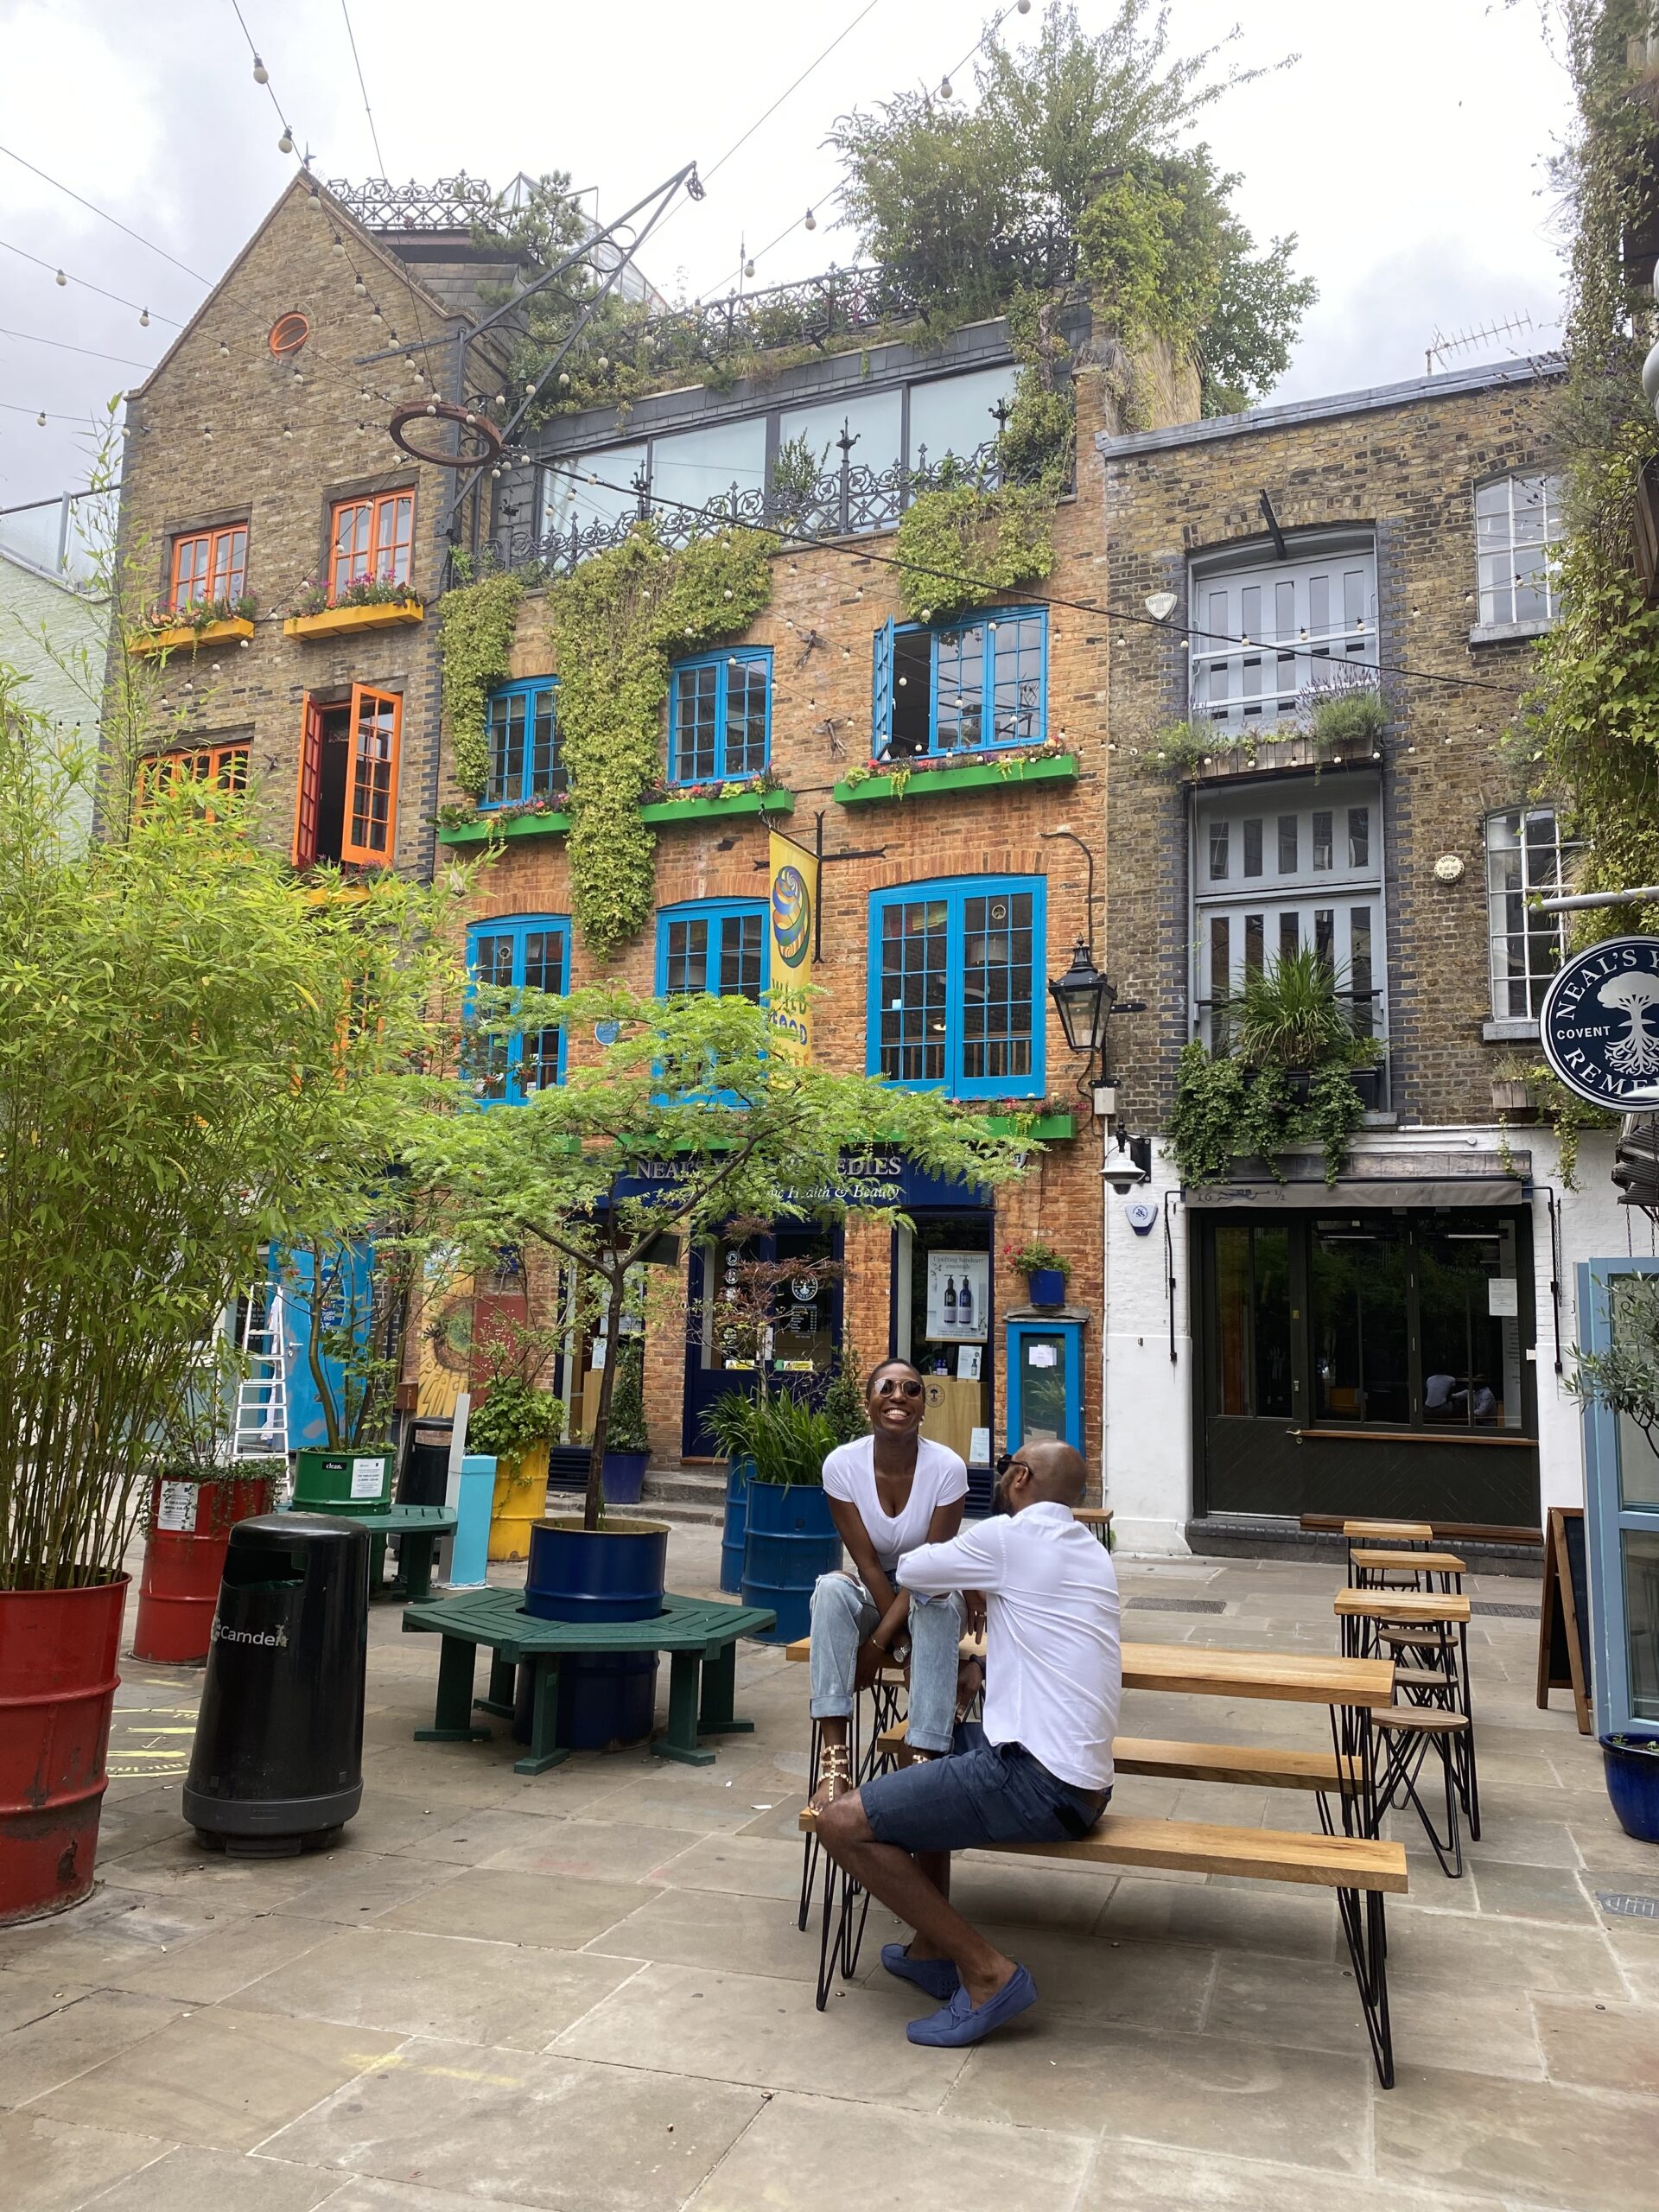 St Neal's Yard - 10 Hidden Gems in London - Lifewithbugo